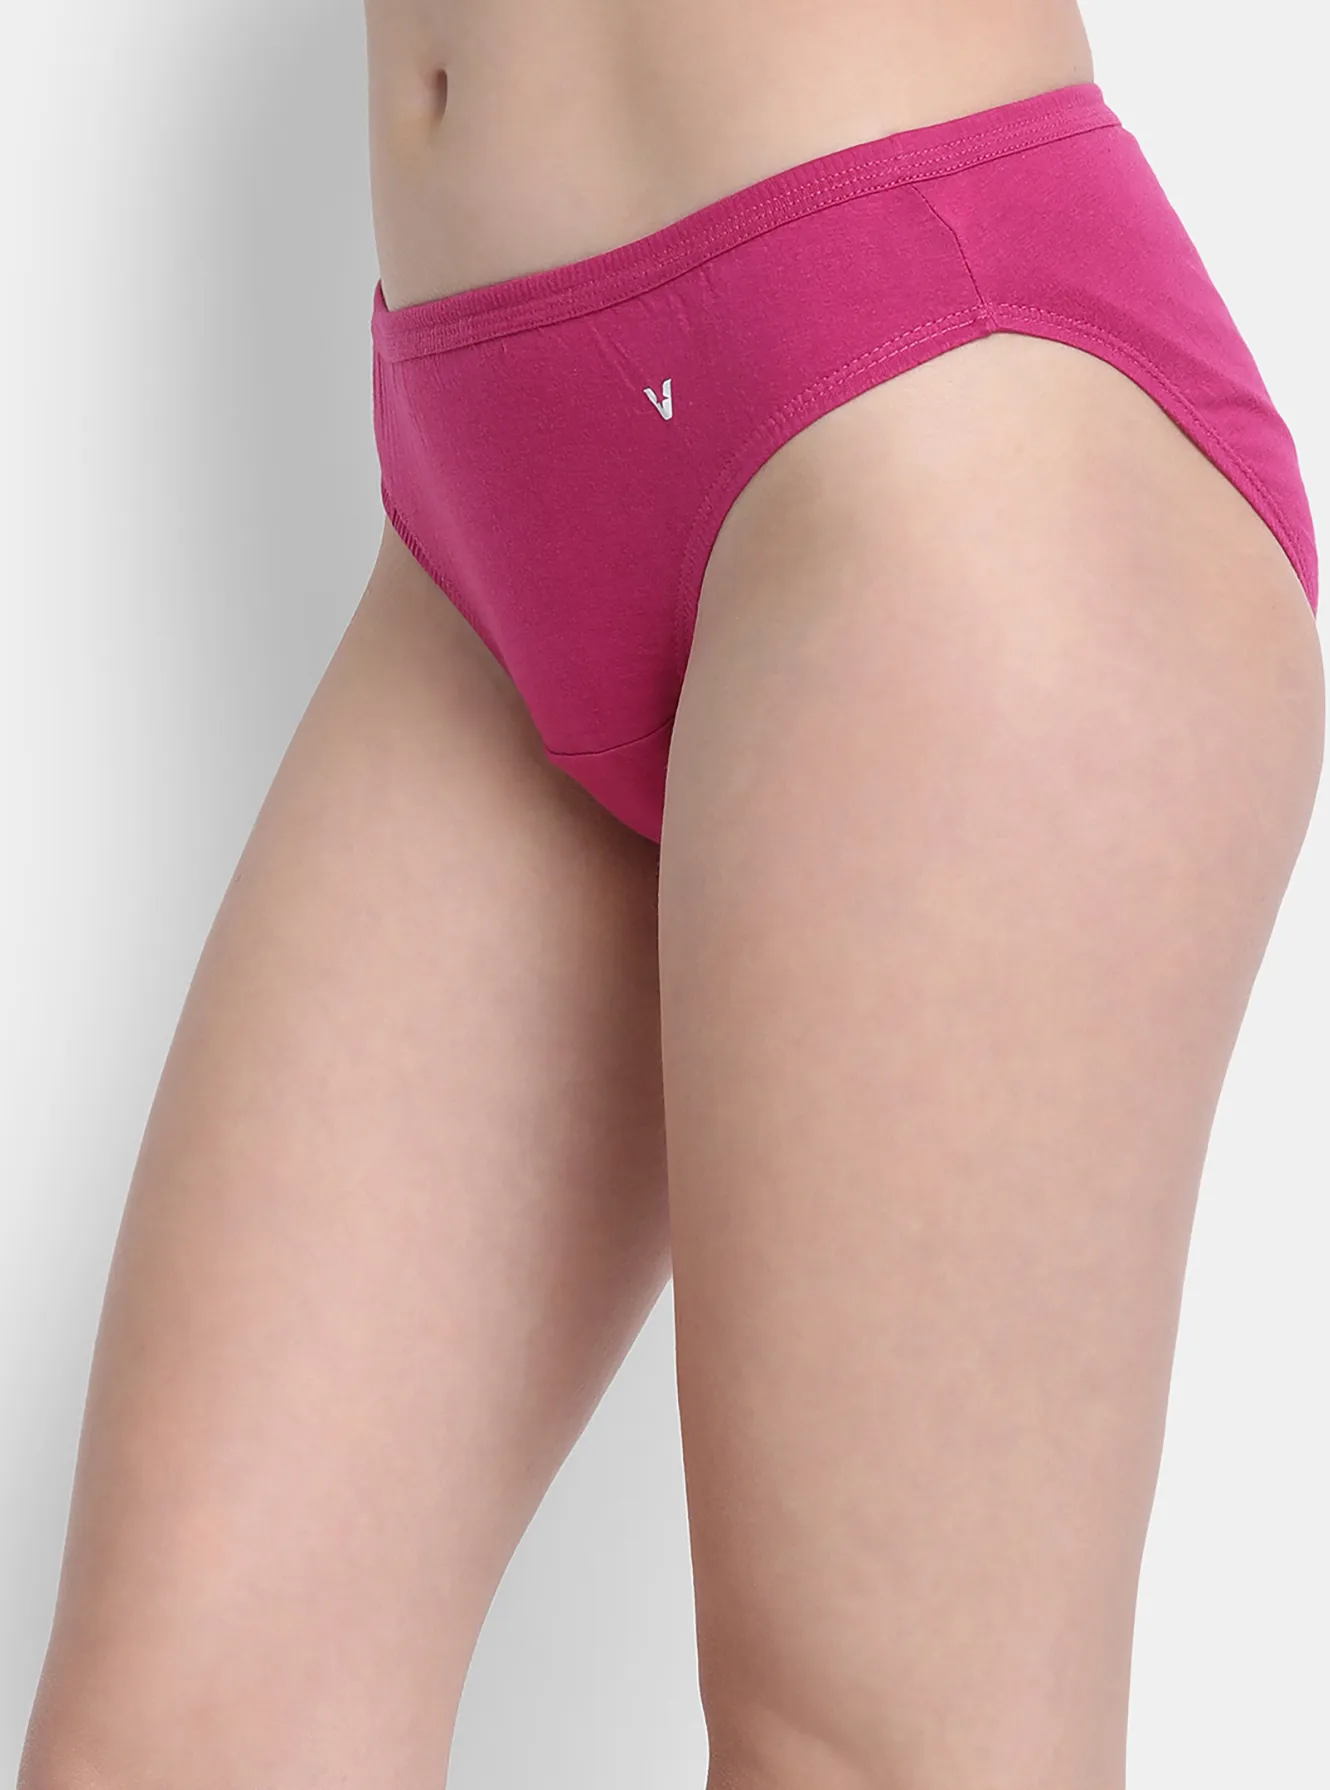 Elastic-Leg Cotton Panties  Womens Brief Style Underwear